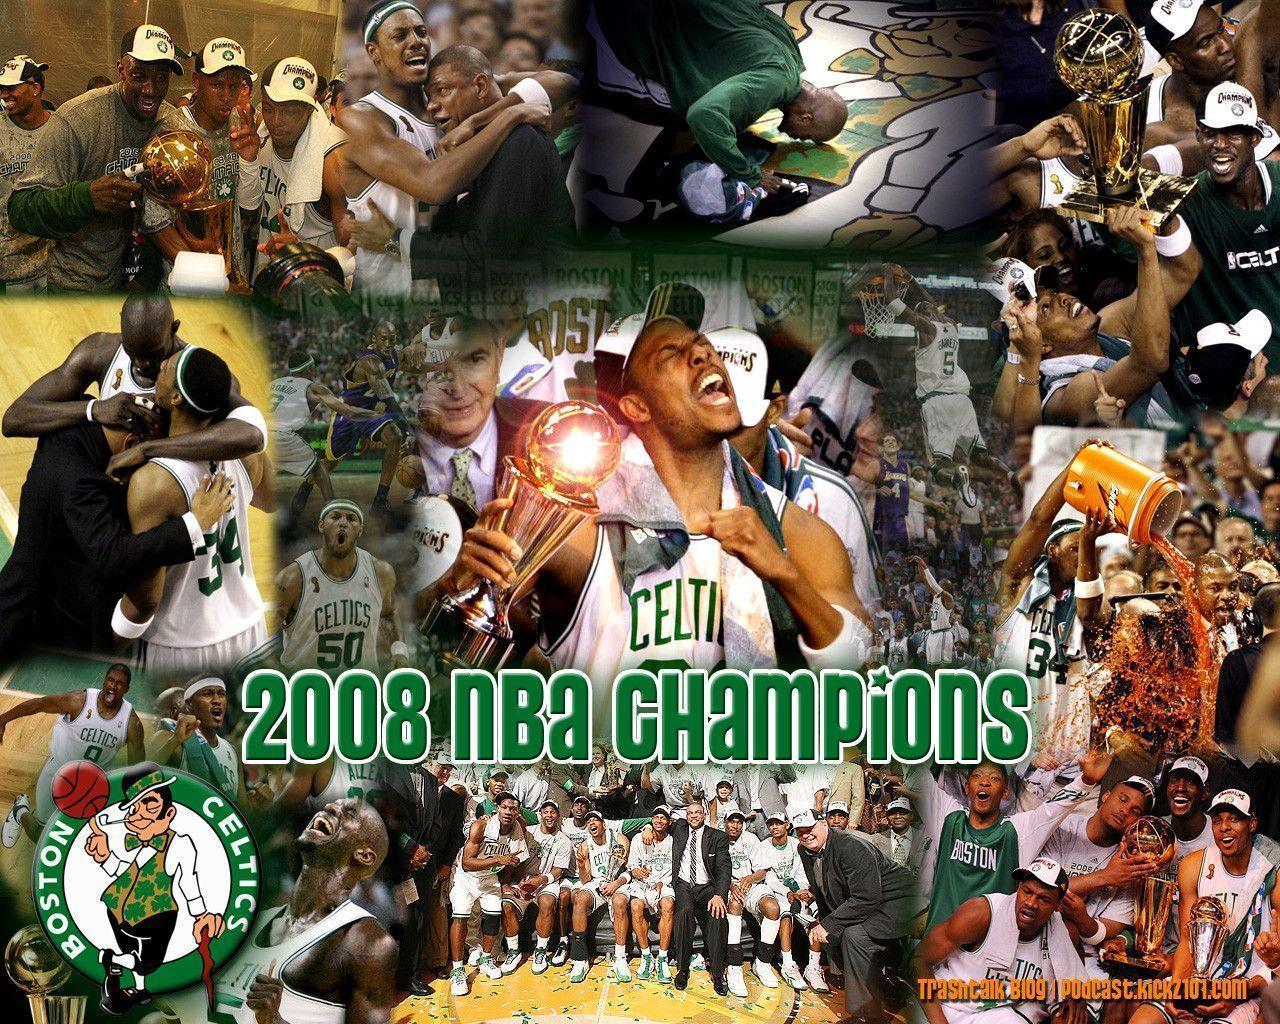 Your 2008 NBA Champions, the Boston Celtics